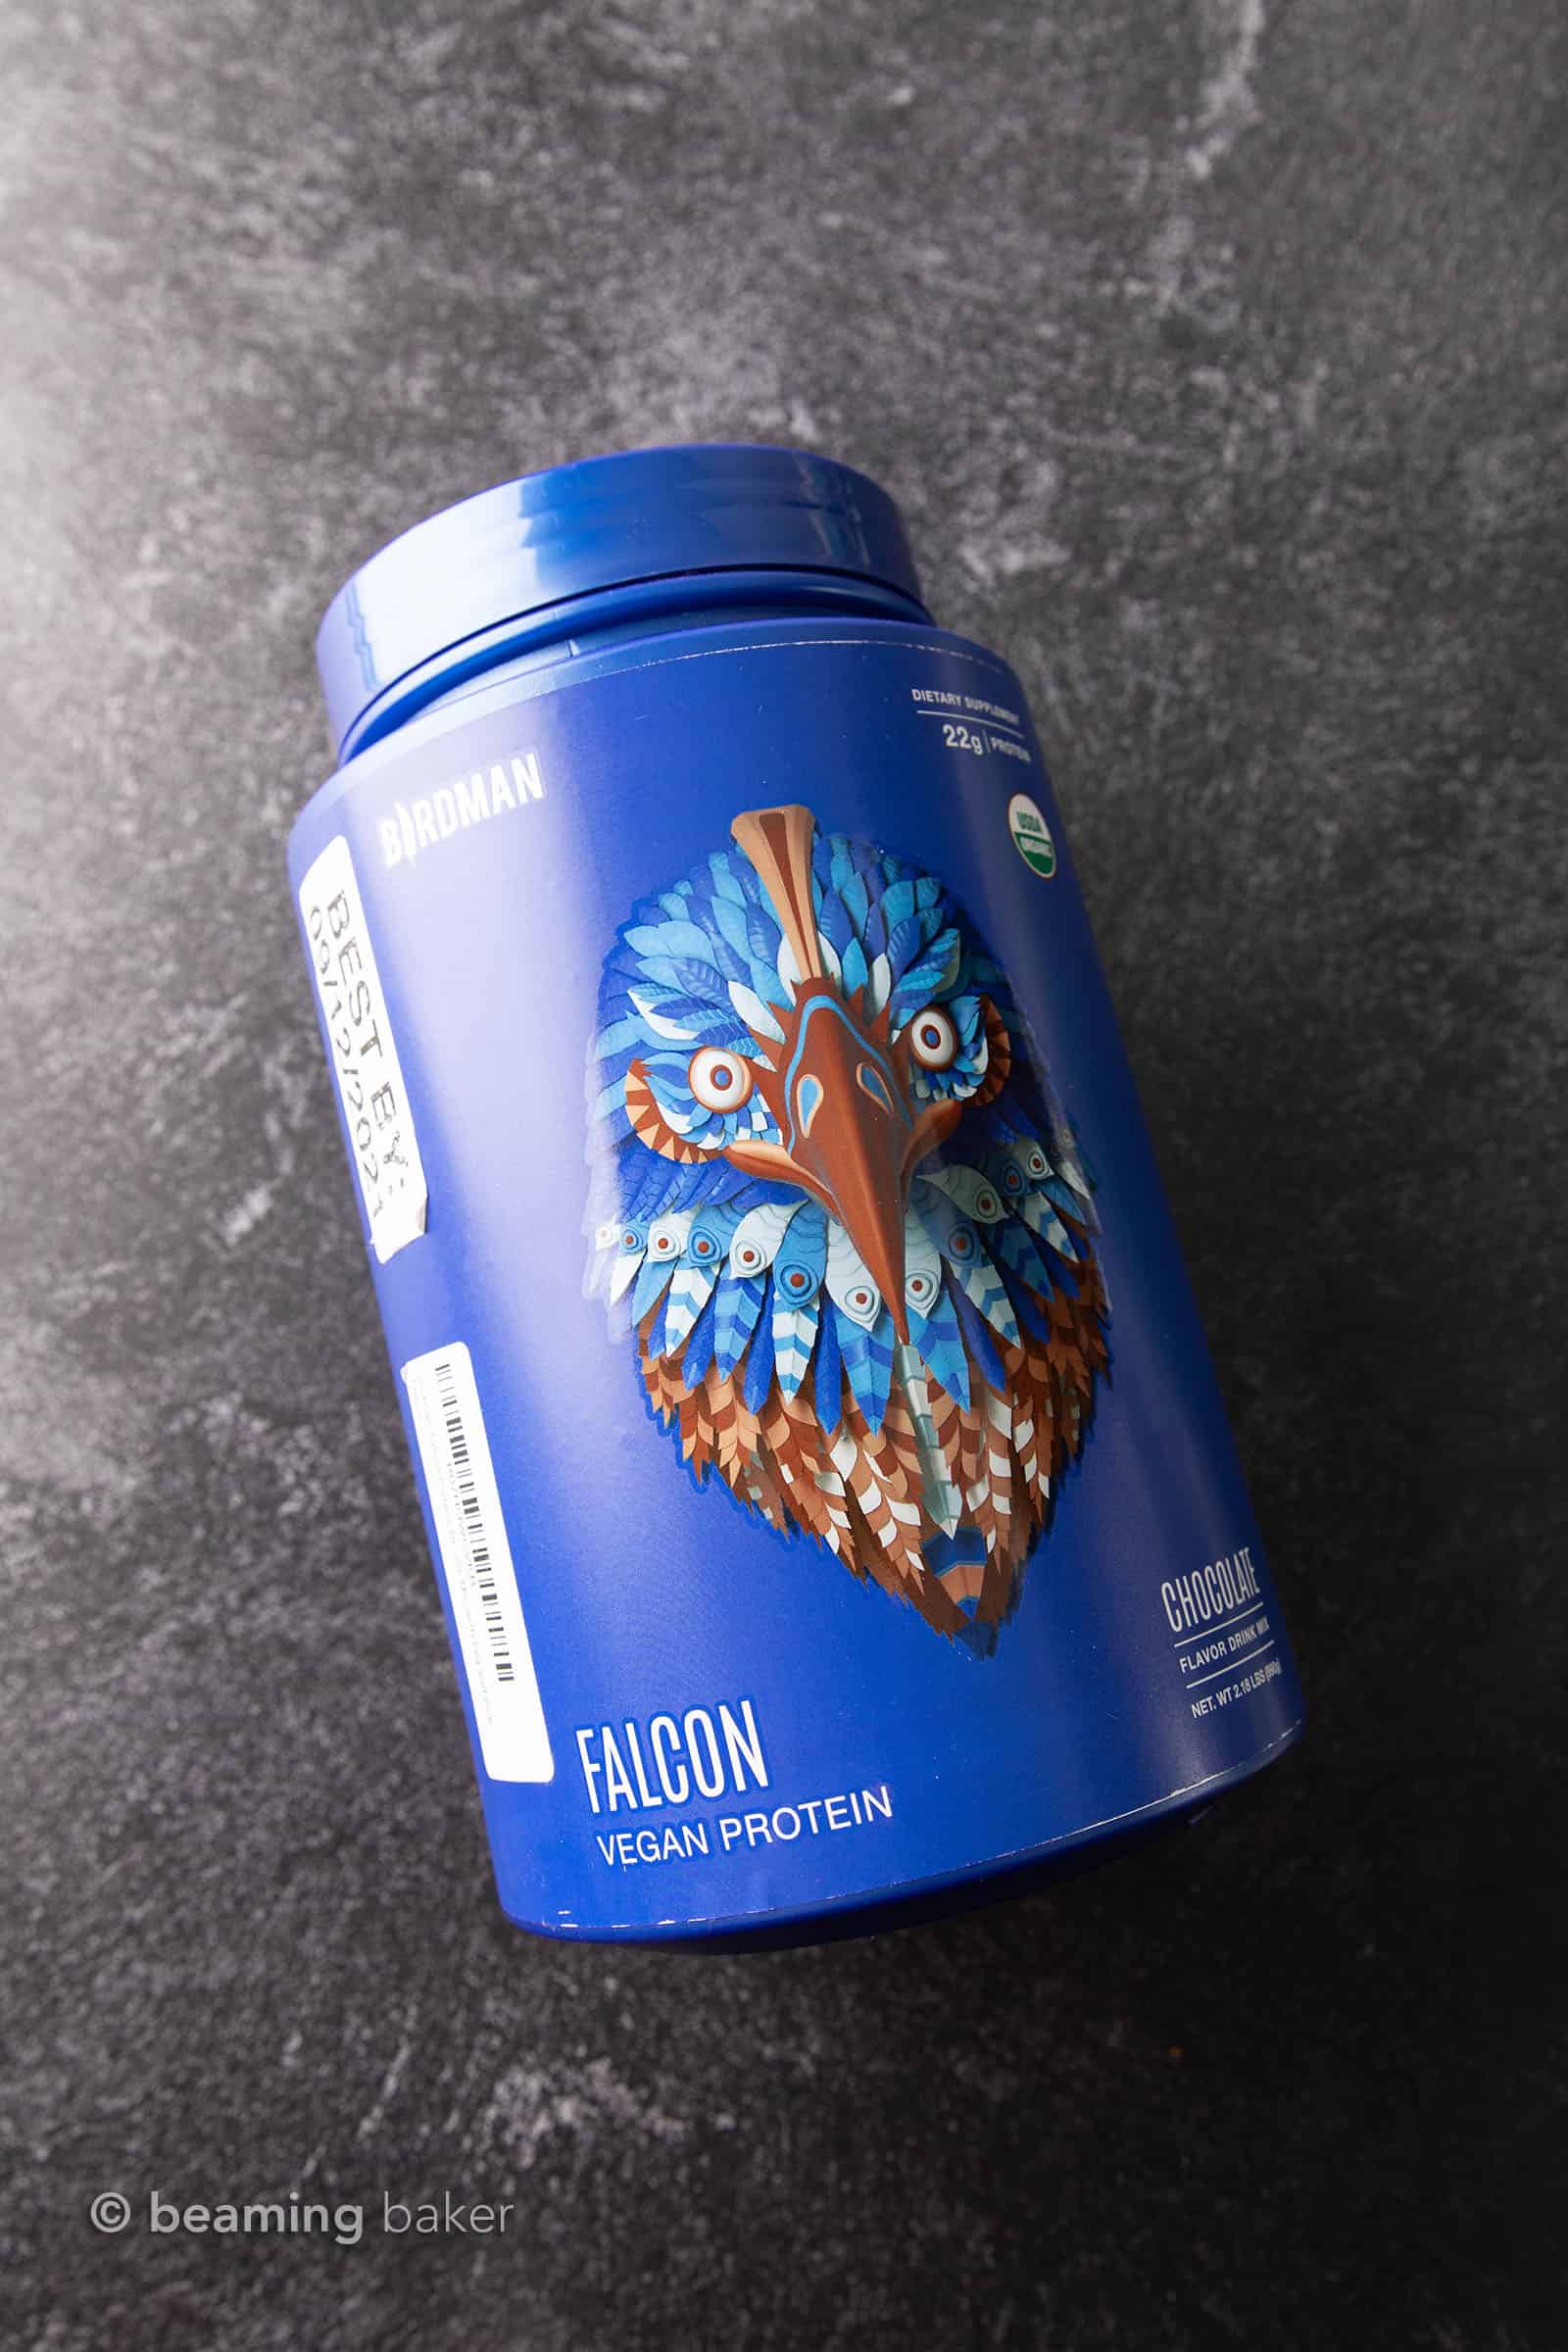 Container of Birdman vegan chocolate protein powder on grey background